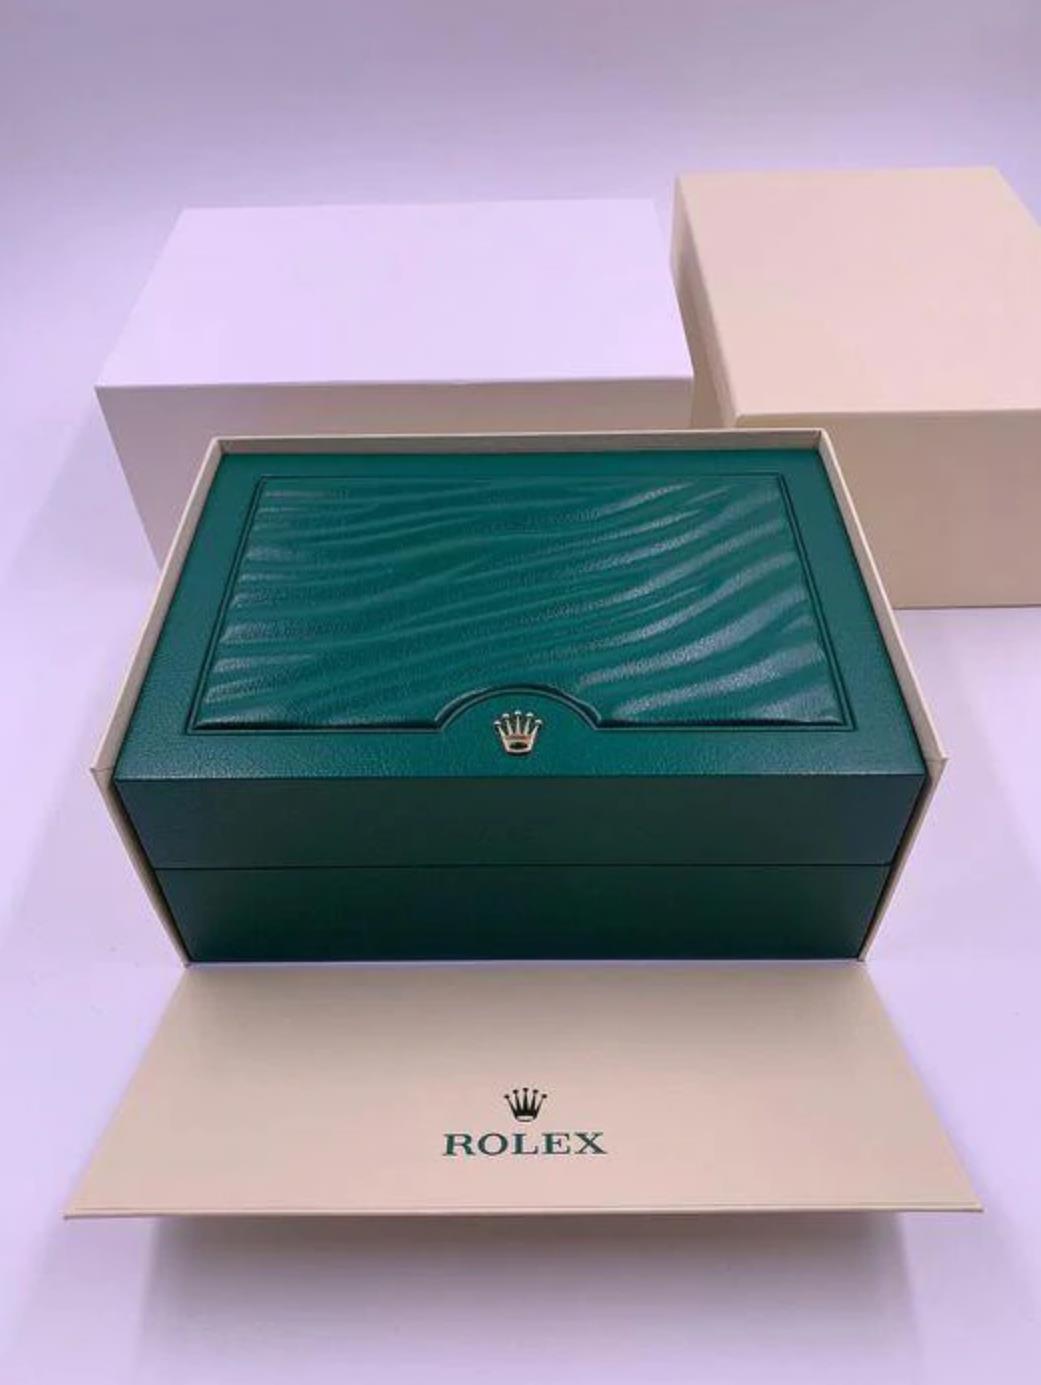 A Rolex Watch Box